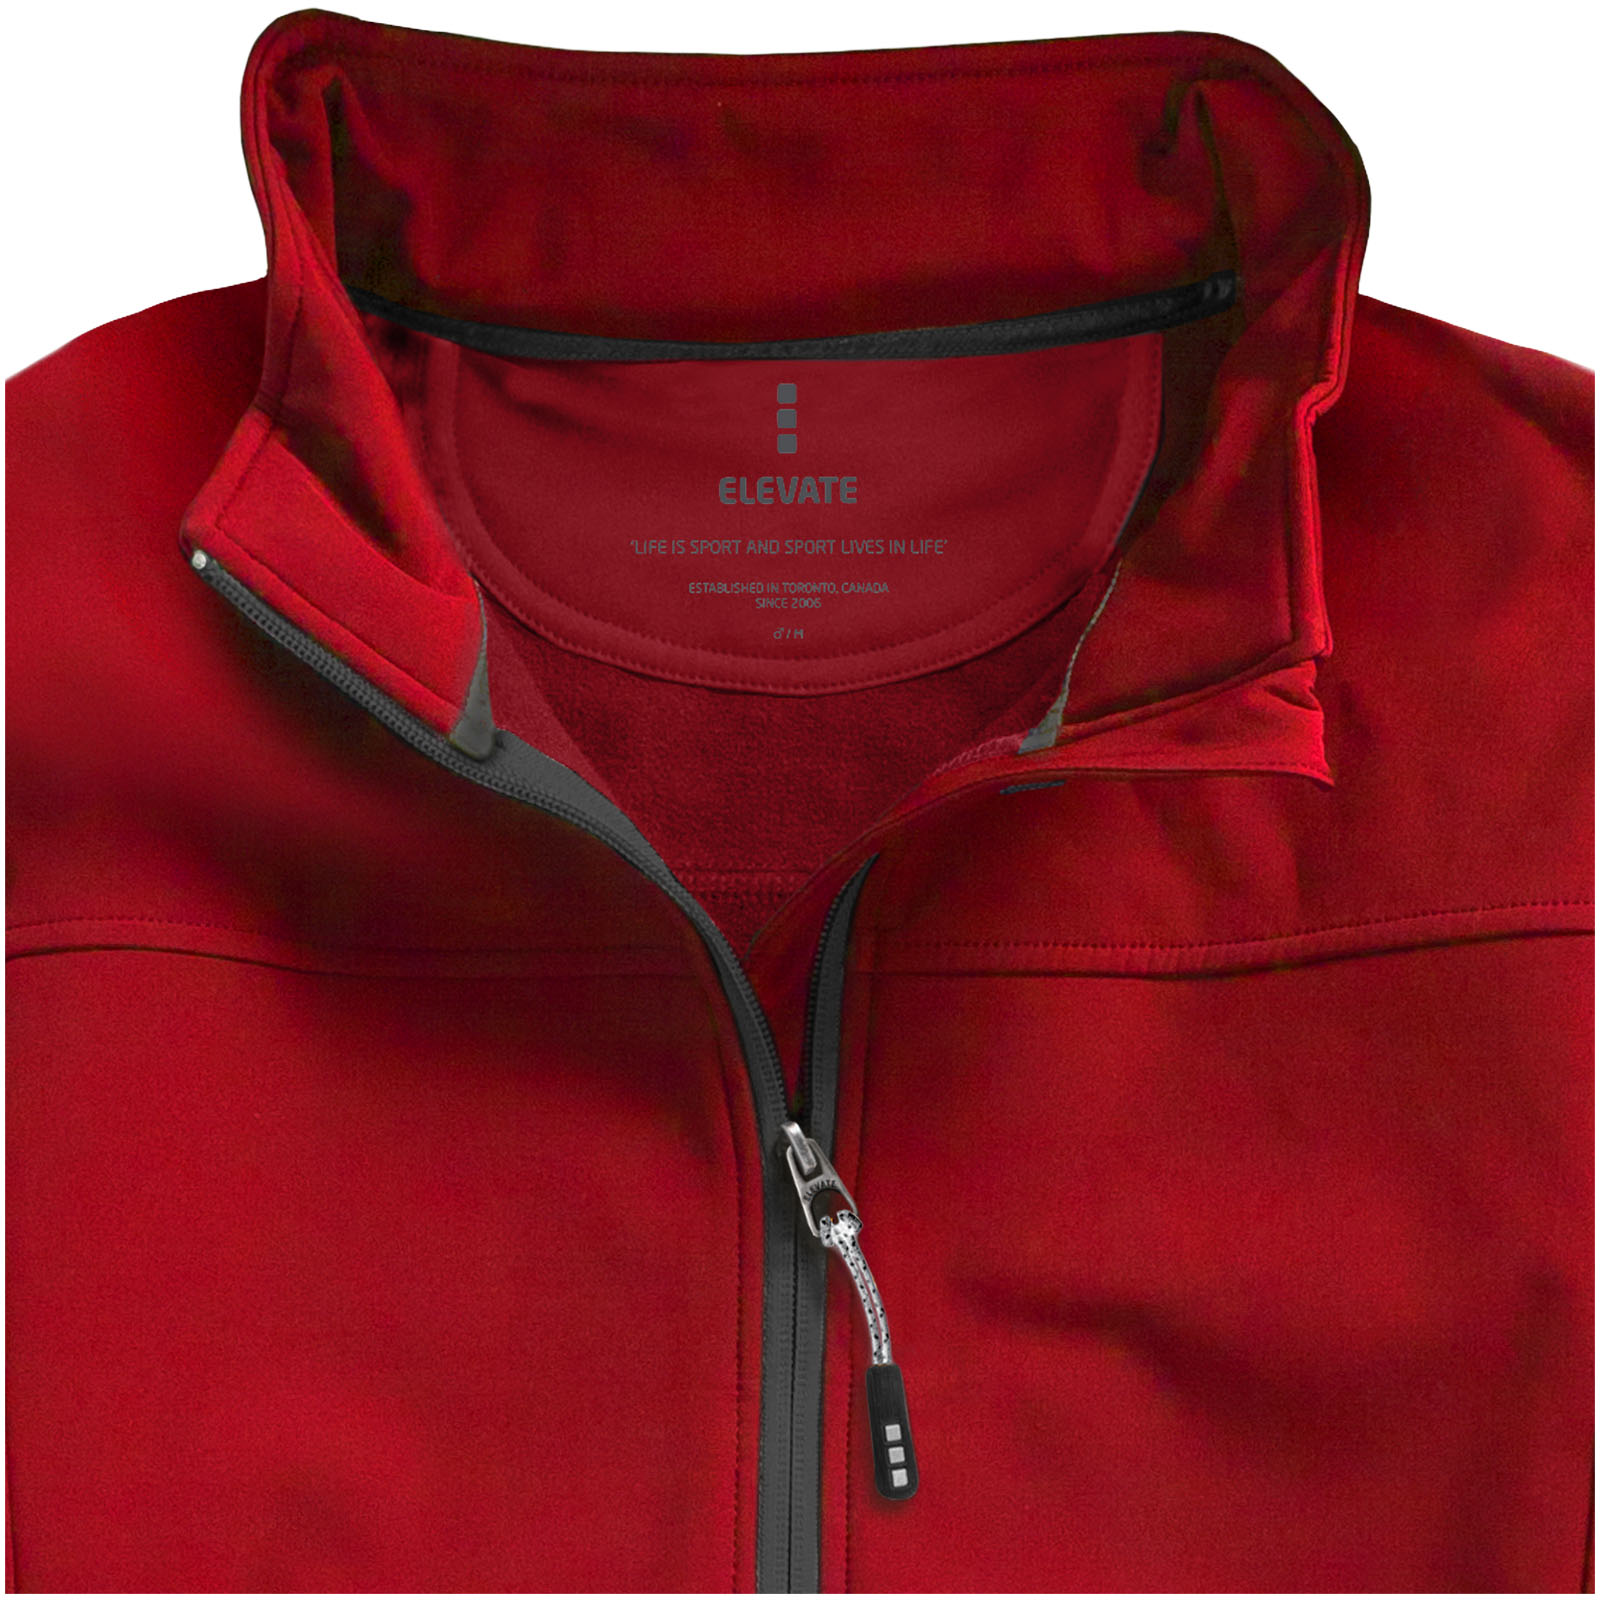 Advertising Jackets - Langley women's softshell jacket - 5